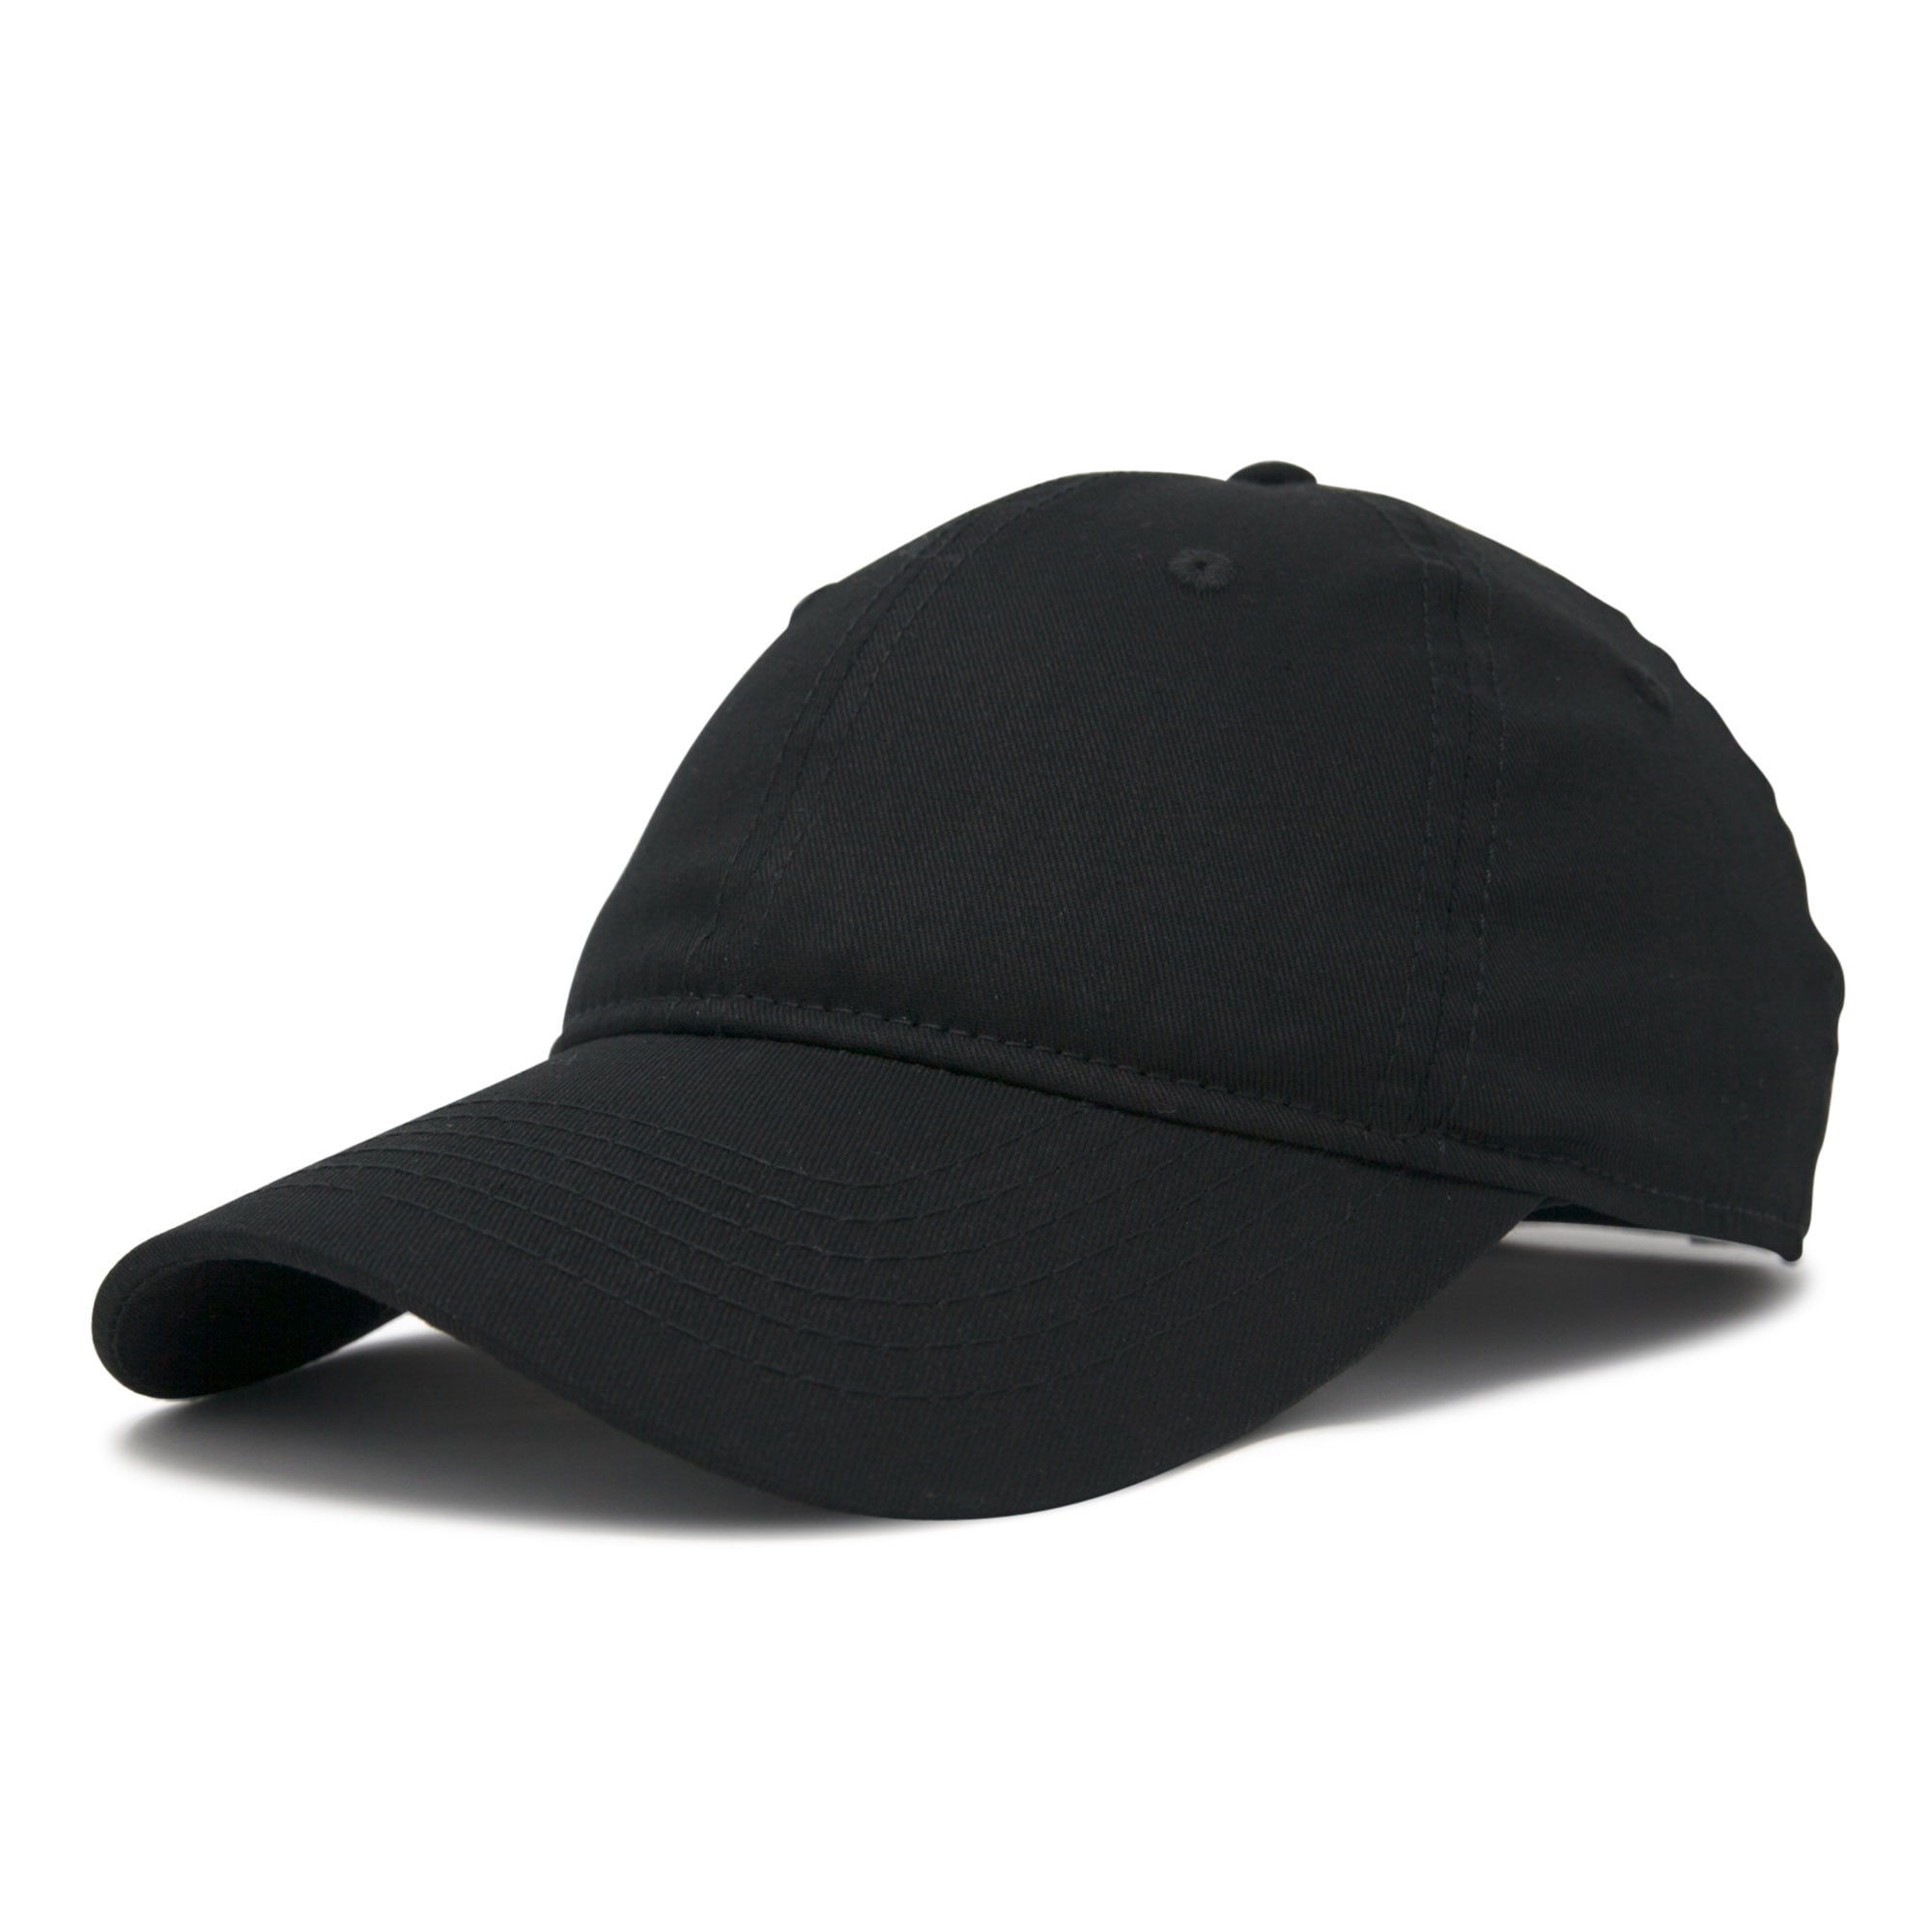 dalix womens hat lightweight 100% cotton cap in black - Walmart.com